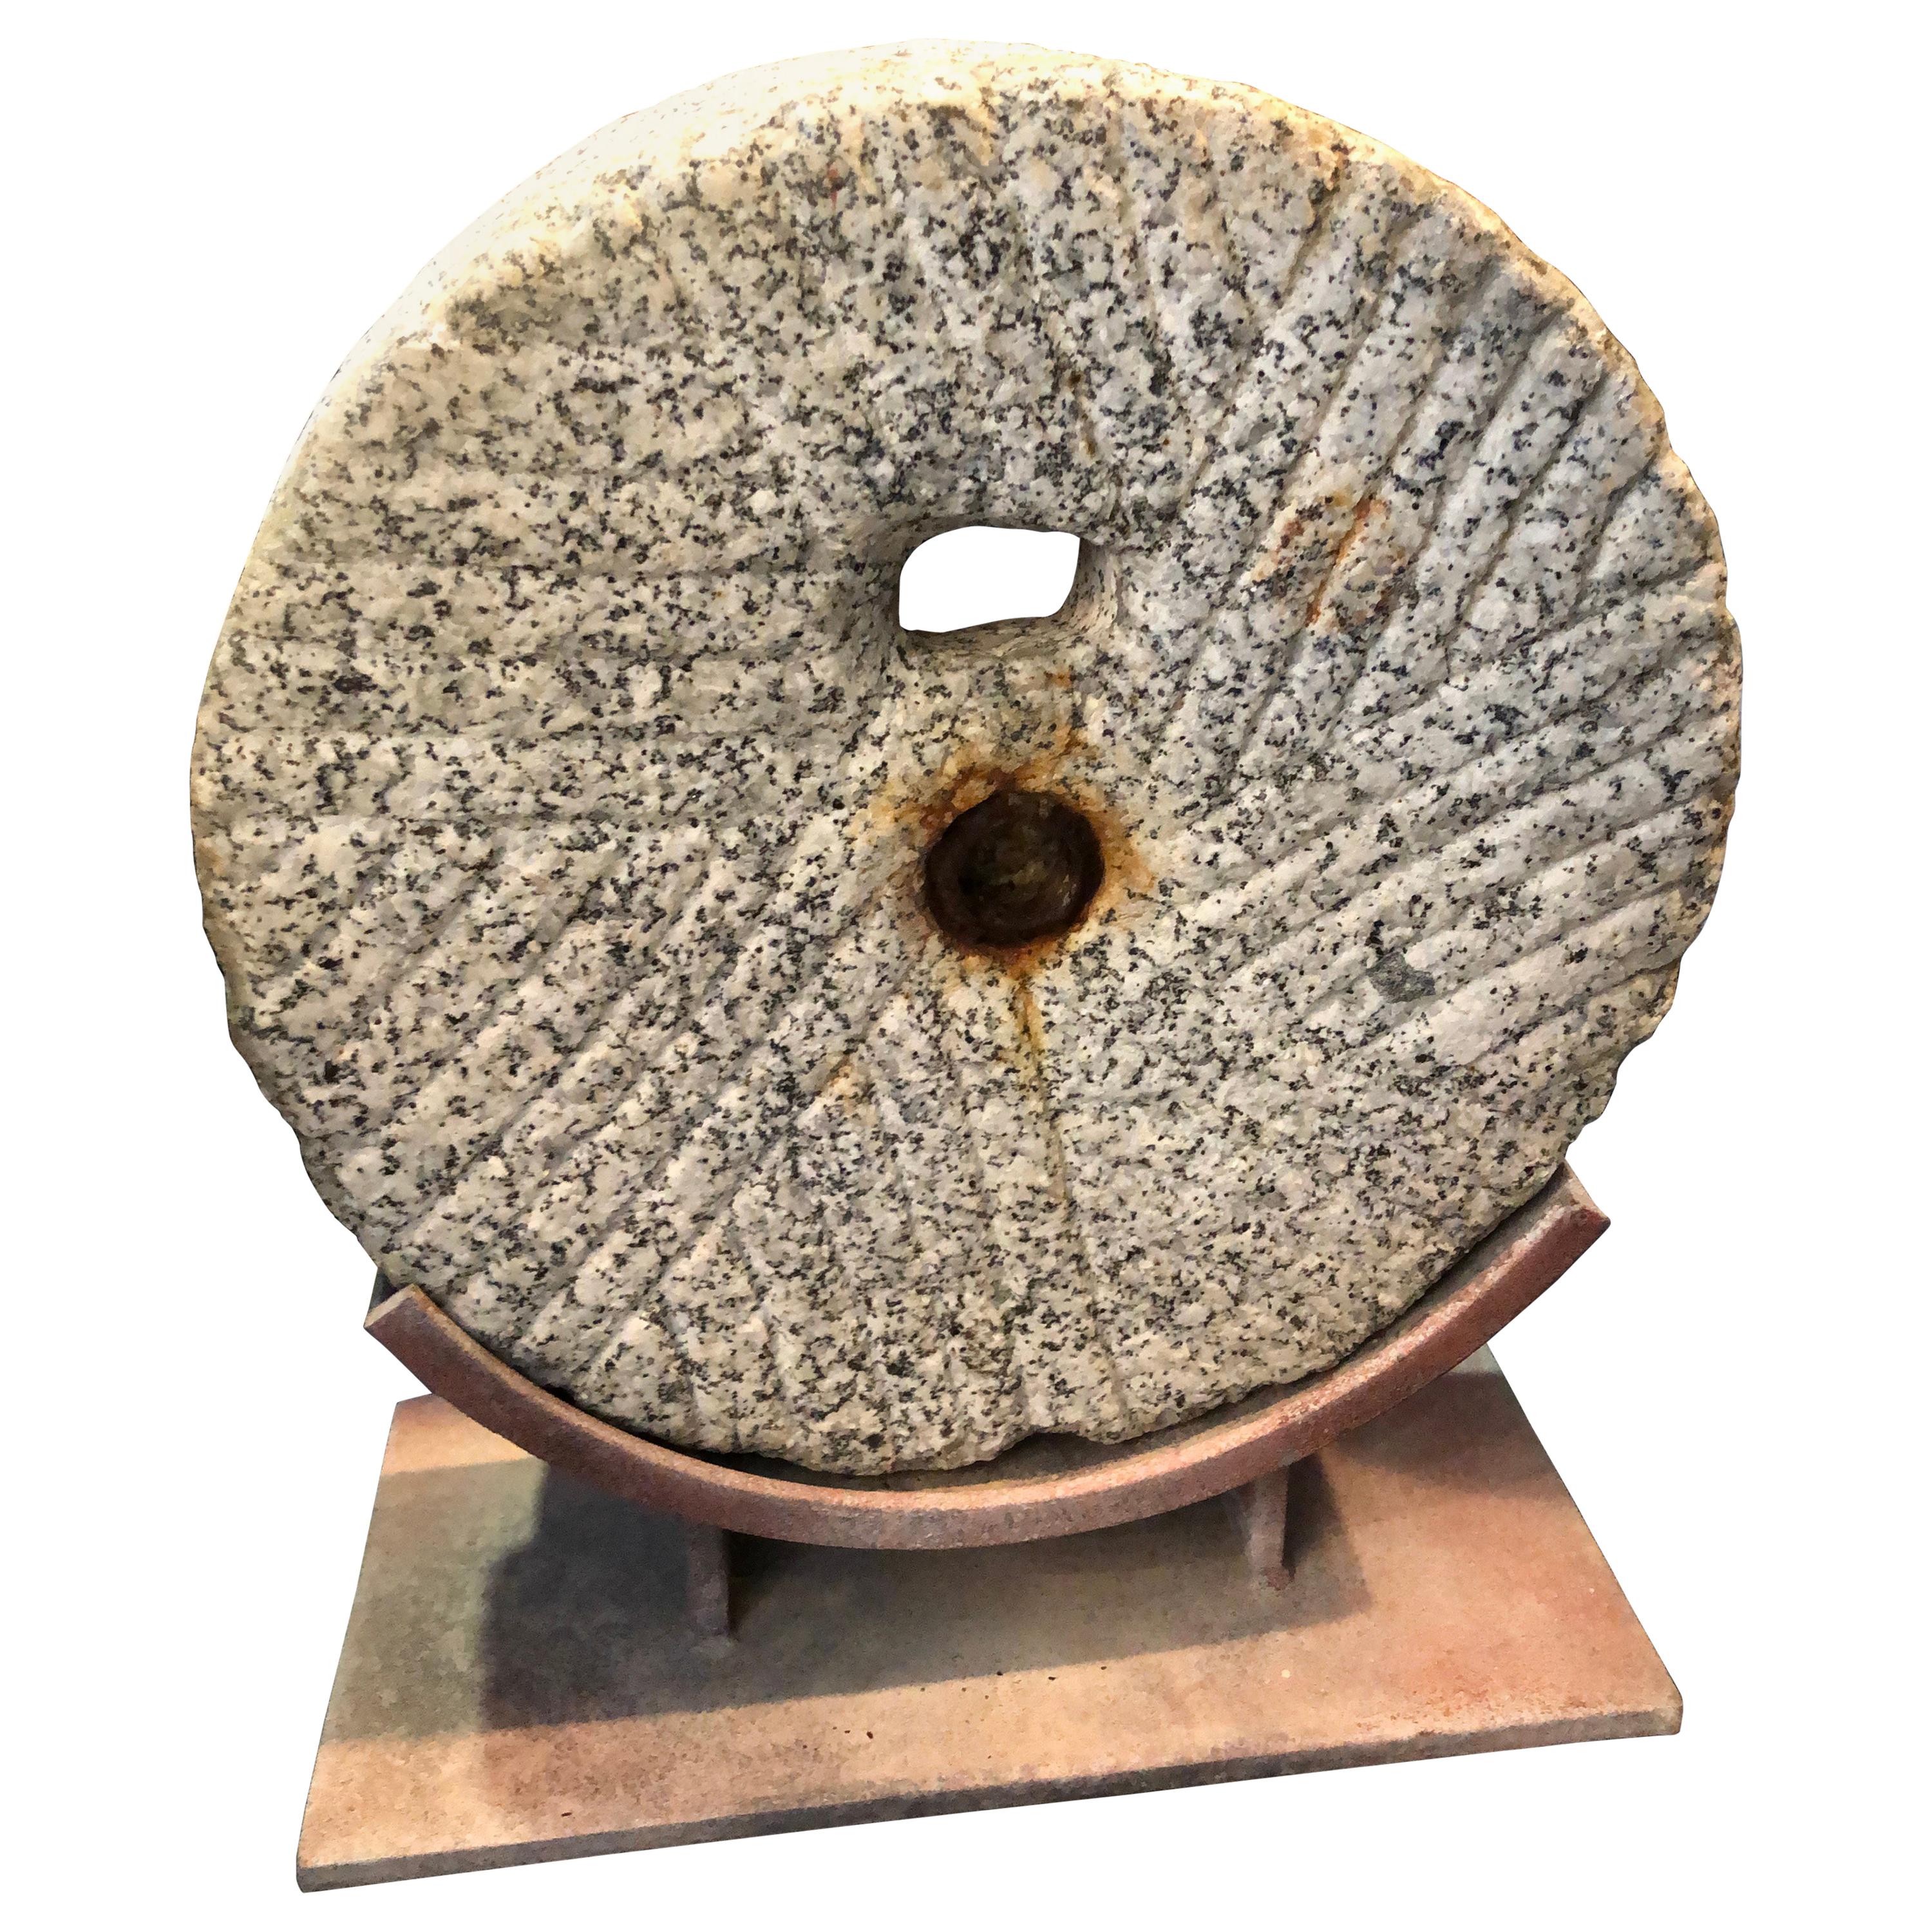 Primitive Grinding Stone Wheel on Iron Display